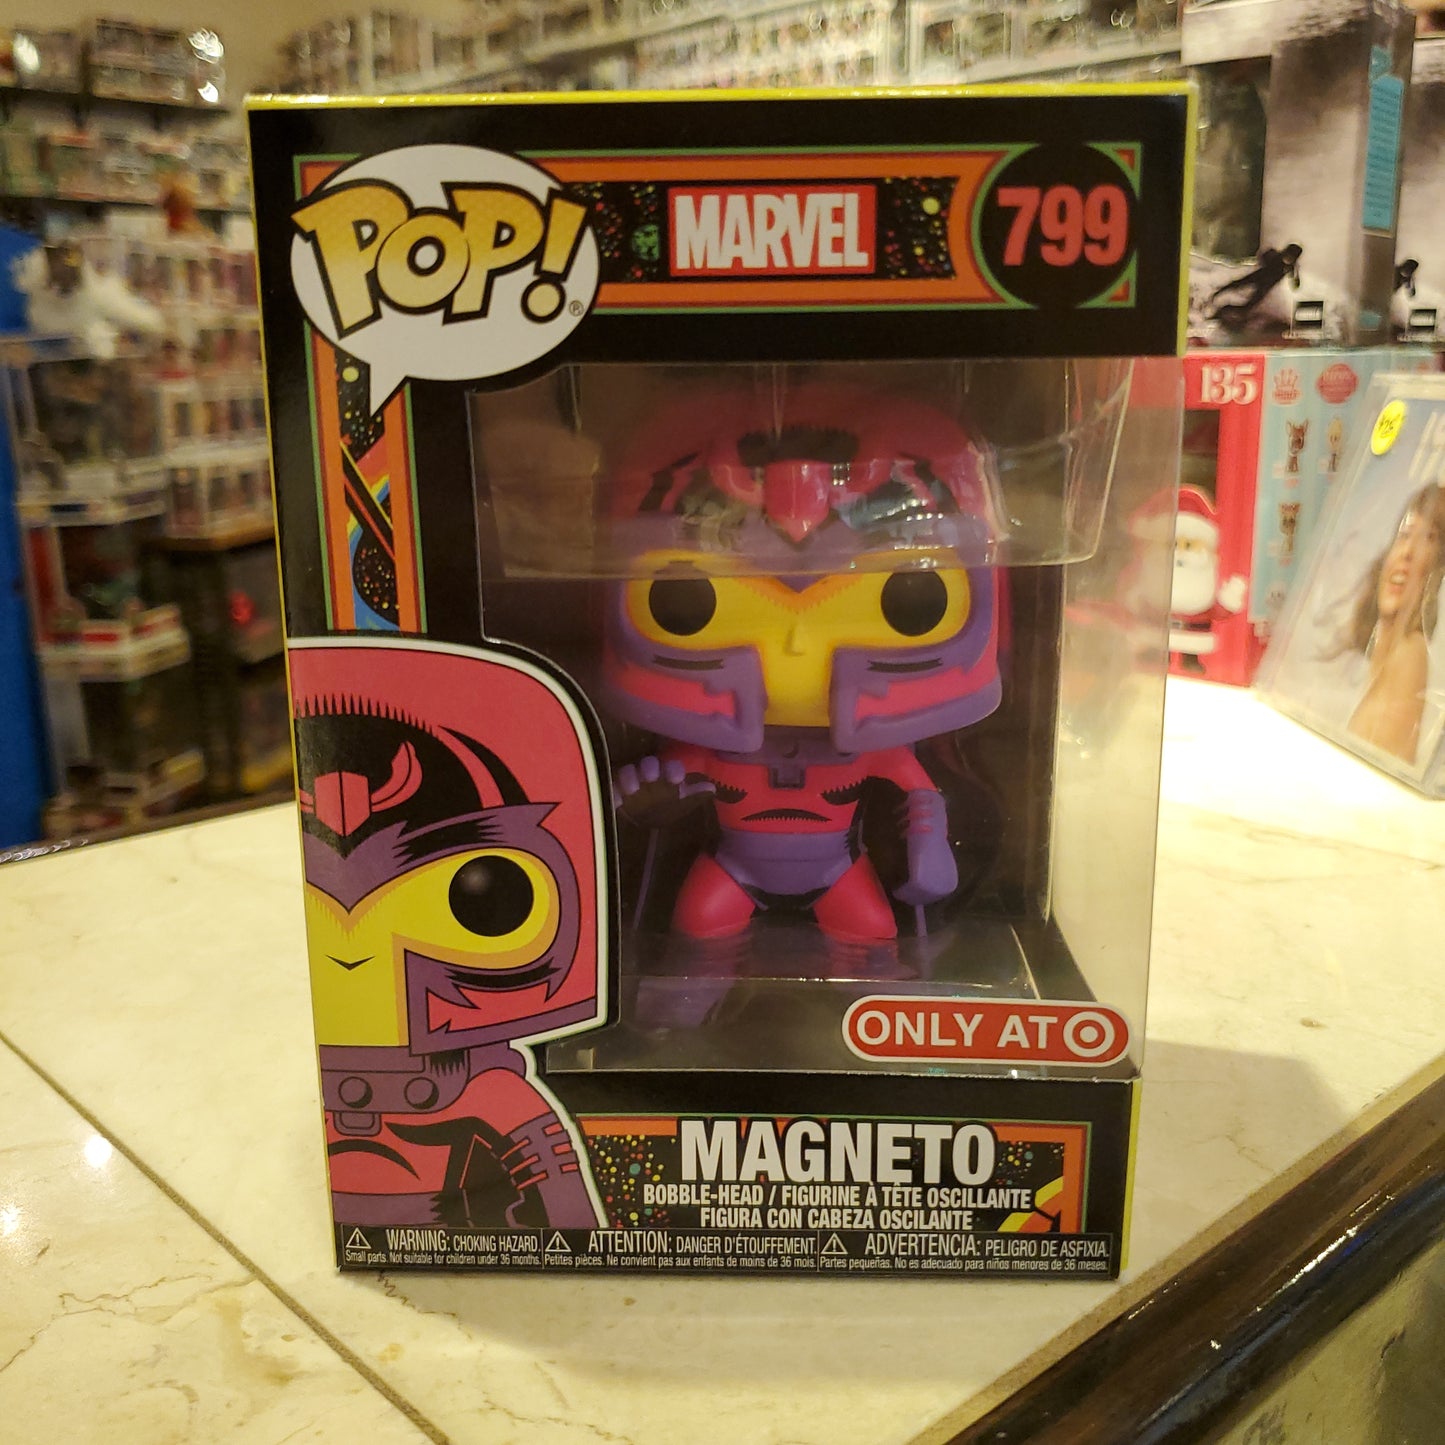 Marvel X-men - Magneto #799 (BLKLT) - Funko Pop! Vinyl Figure